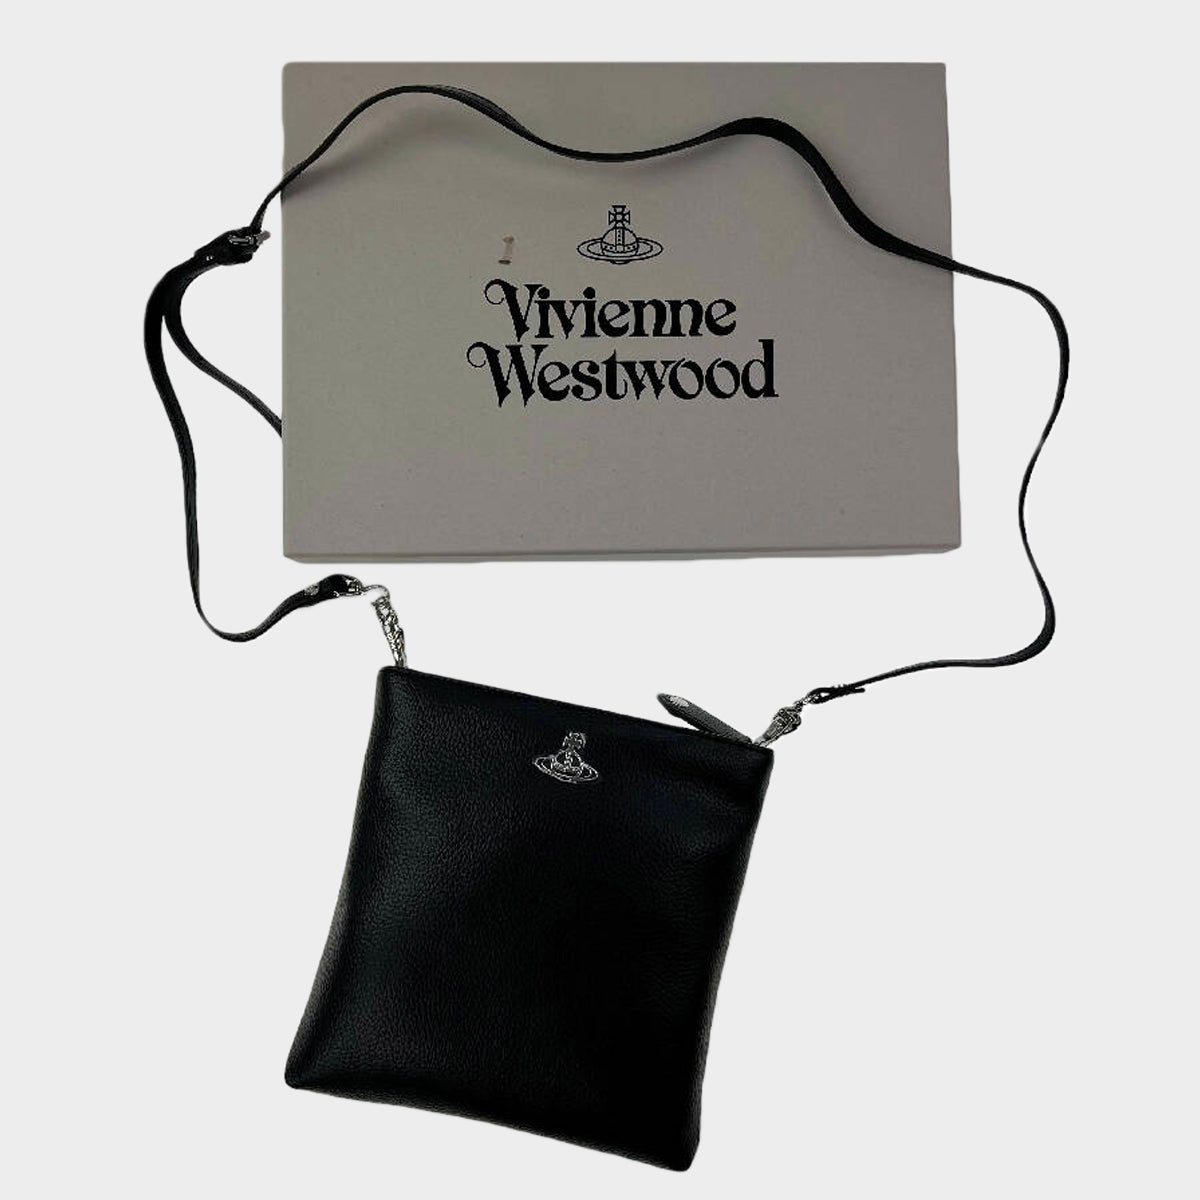 Vivienne Westwood women's black faux leather Squire New Square